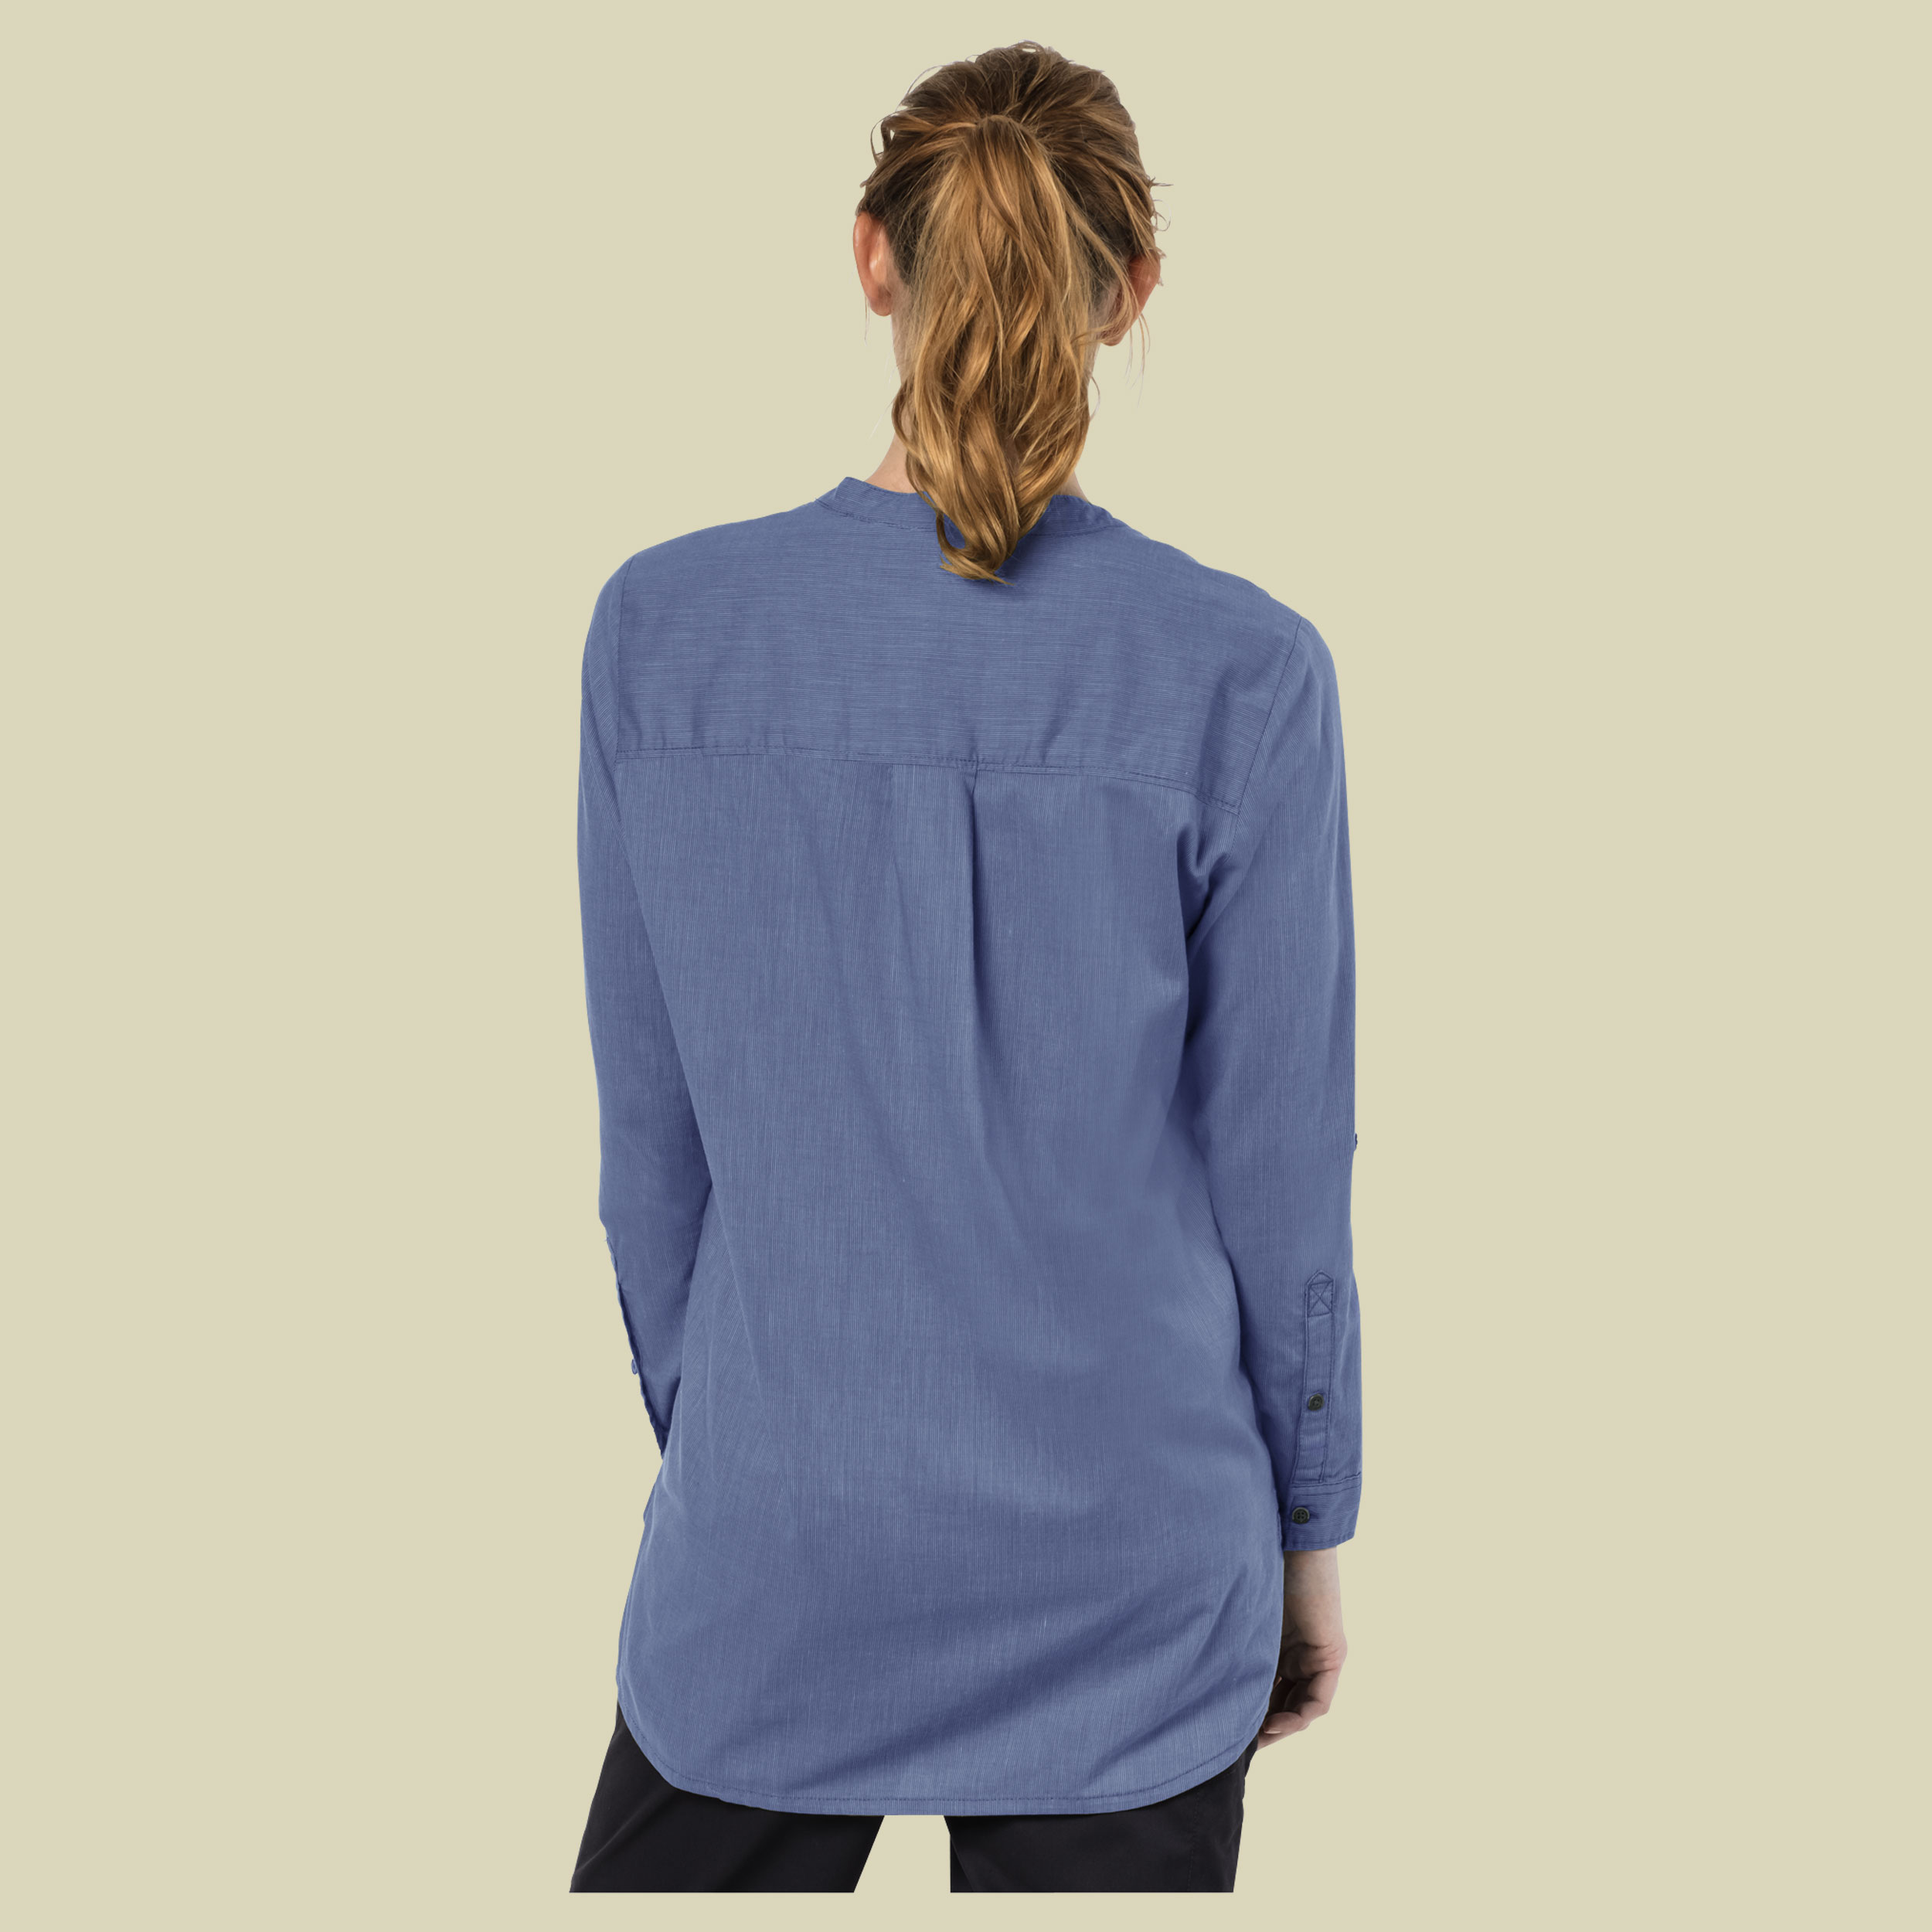 Indian Springs Shirt Women Größe S Farbe dusk blue stripes